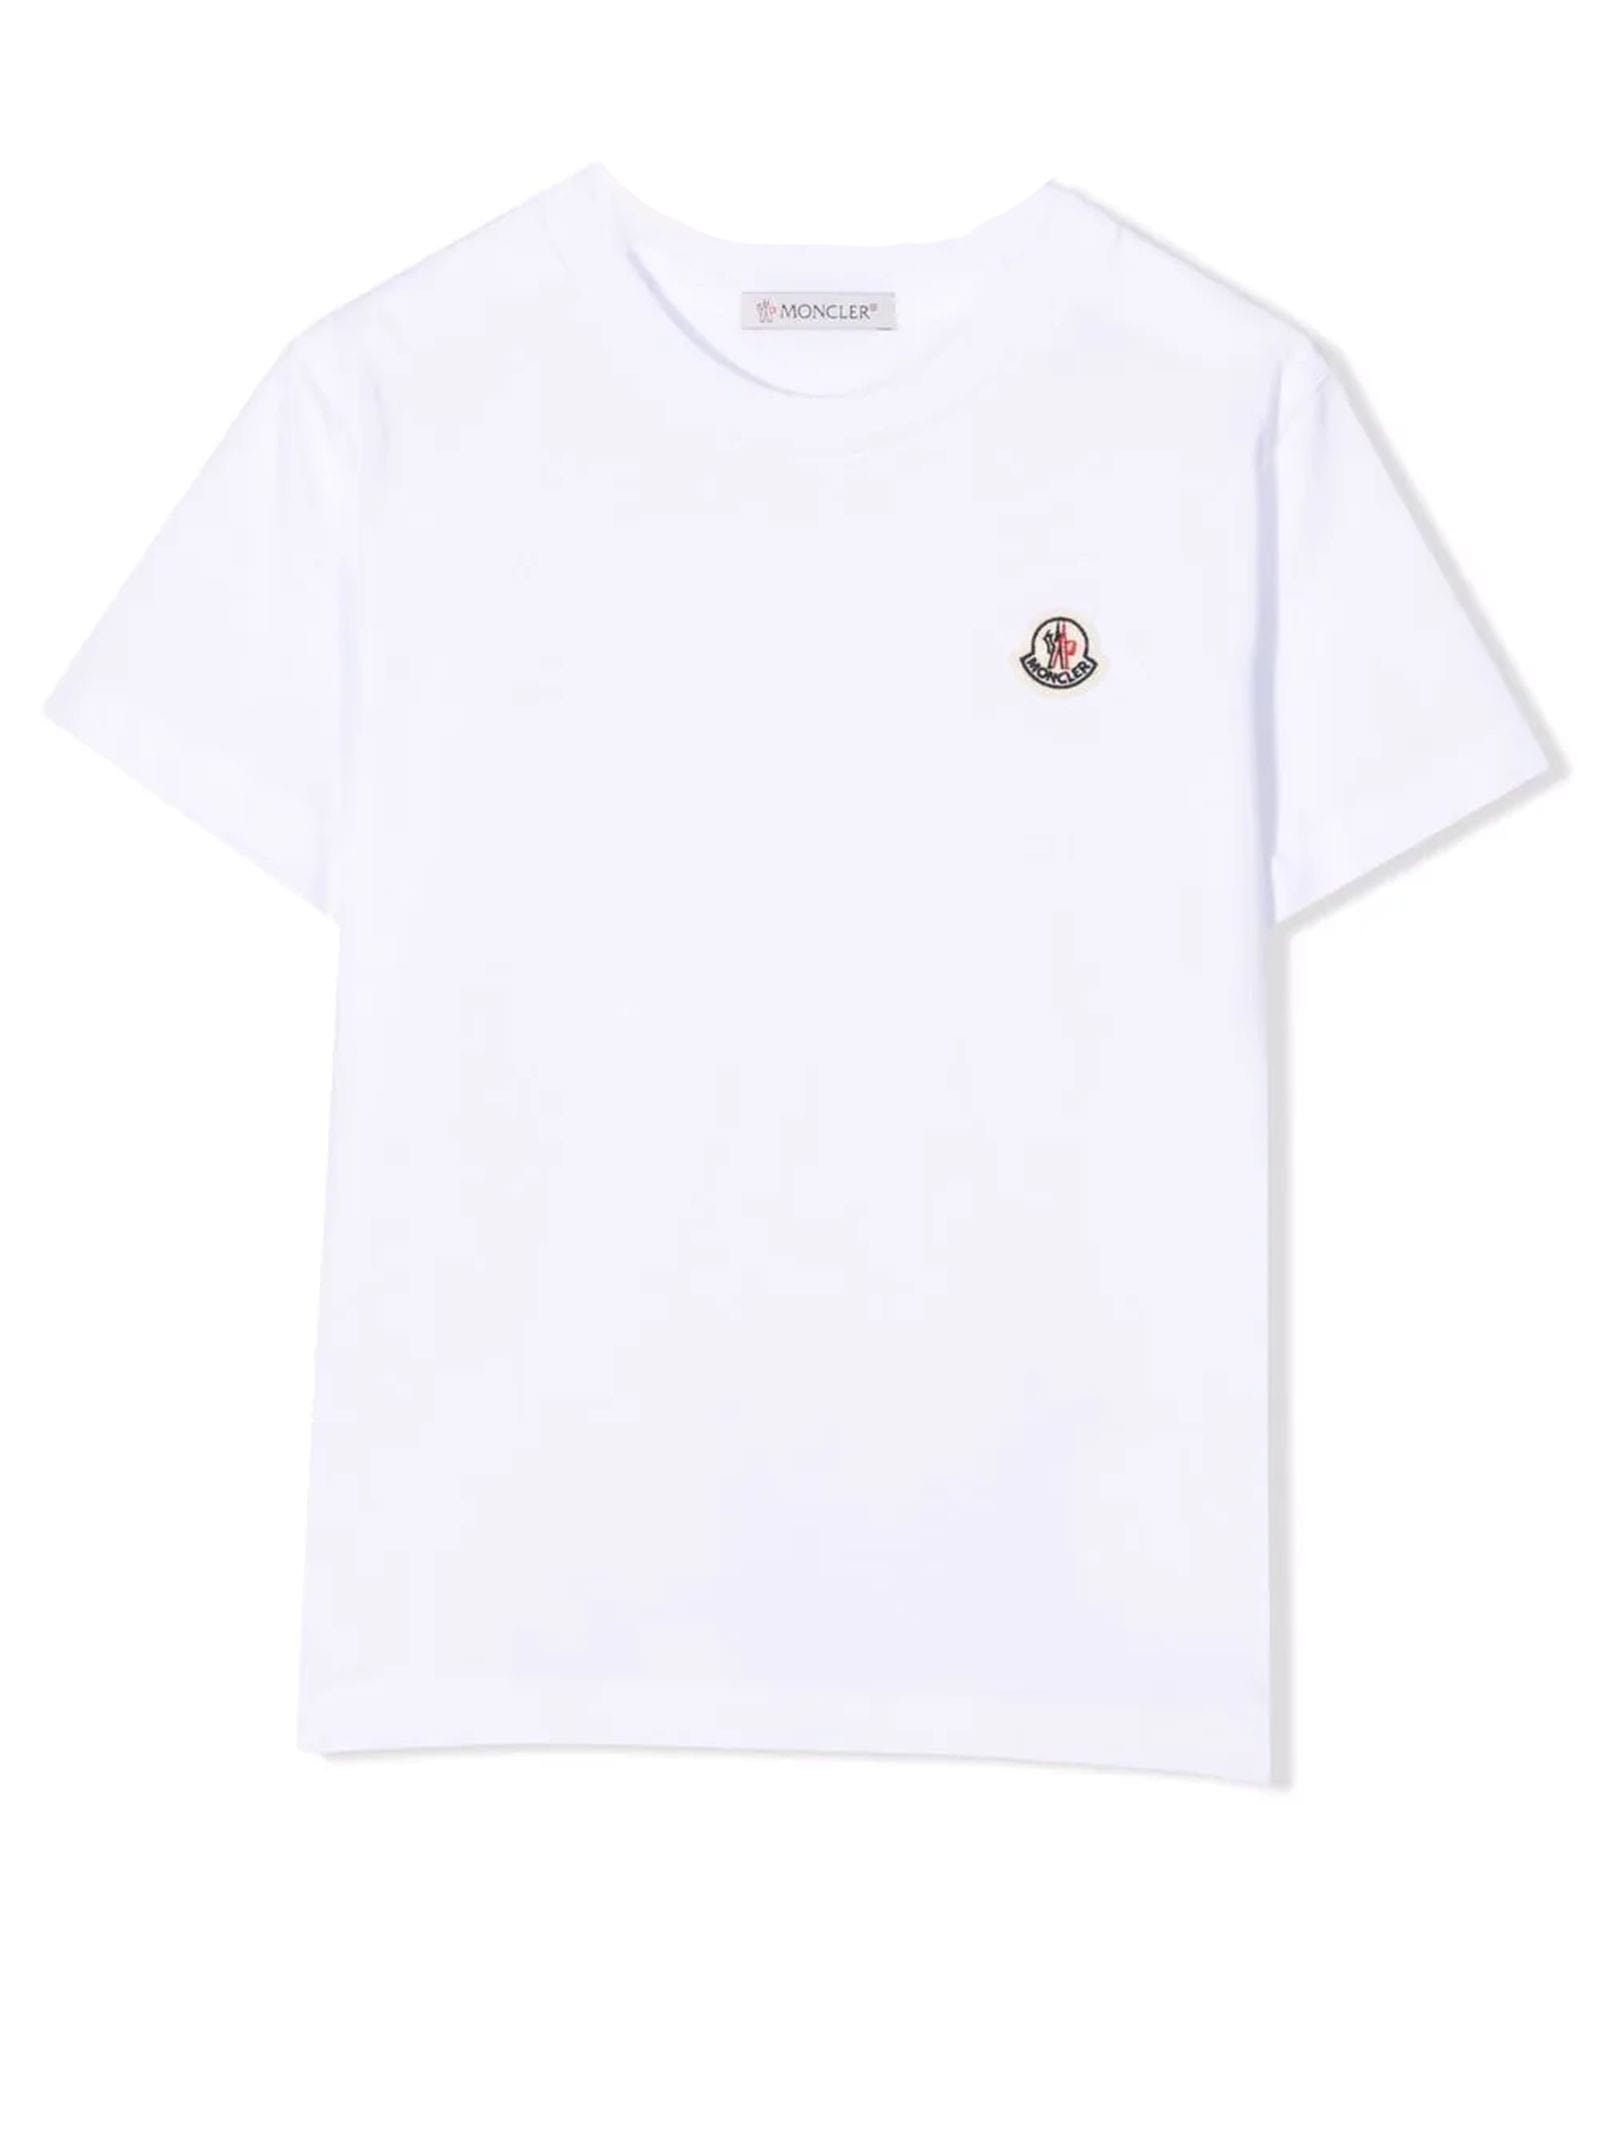 Moncler White Cotton Tshirt